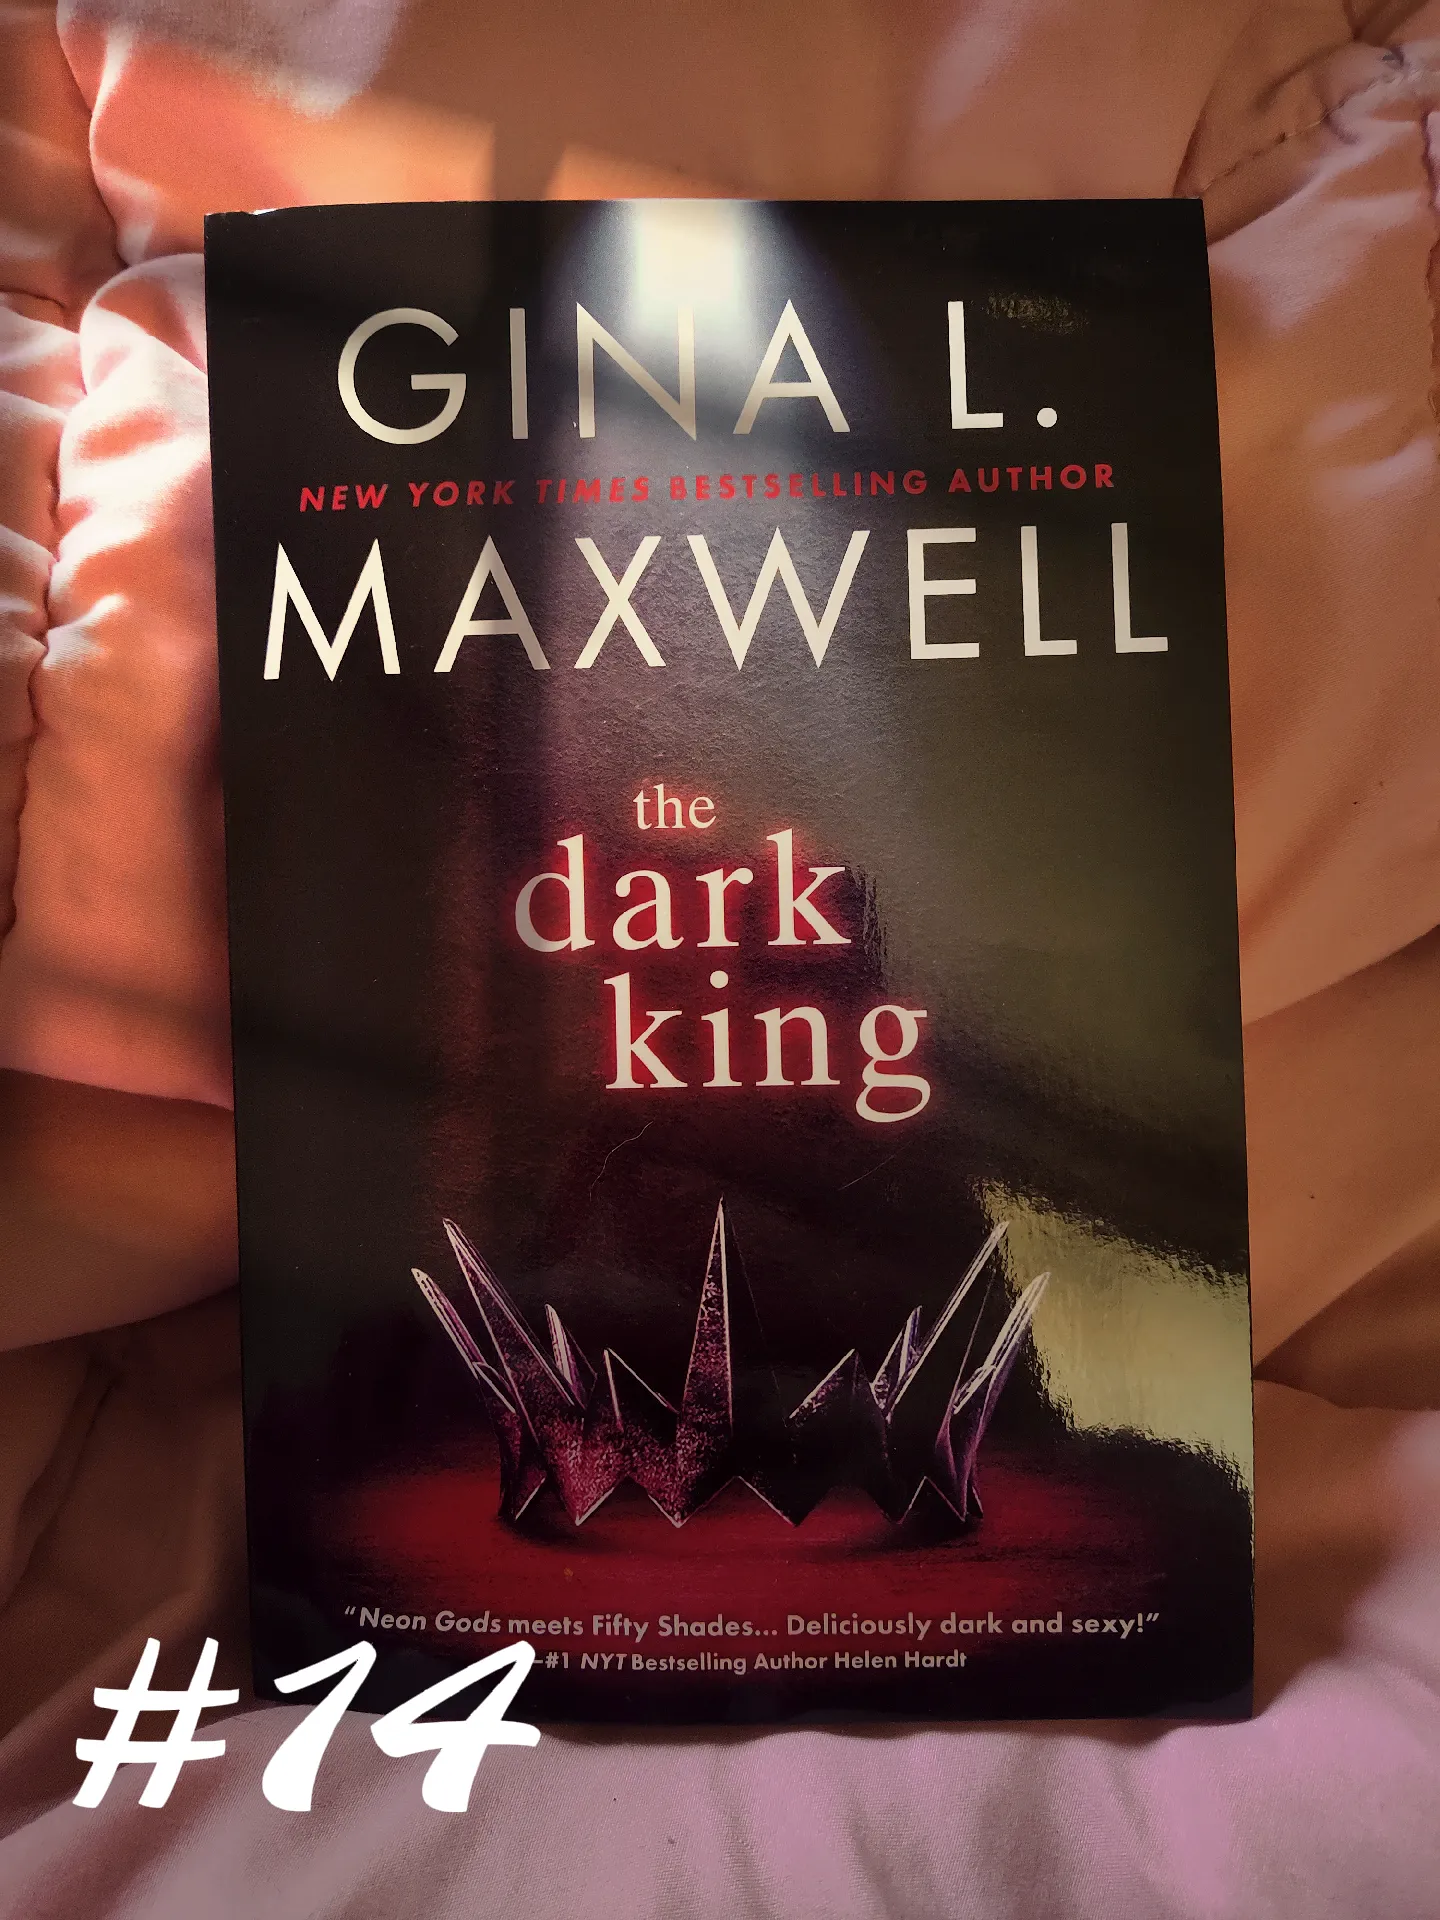 The Dark King: No podrás escapar del rey oscuro, Gina L. Maxwell